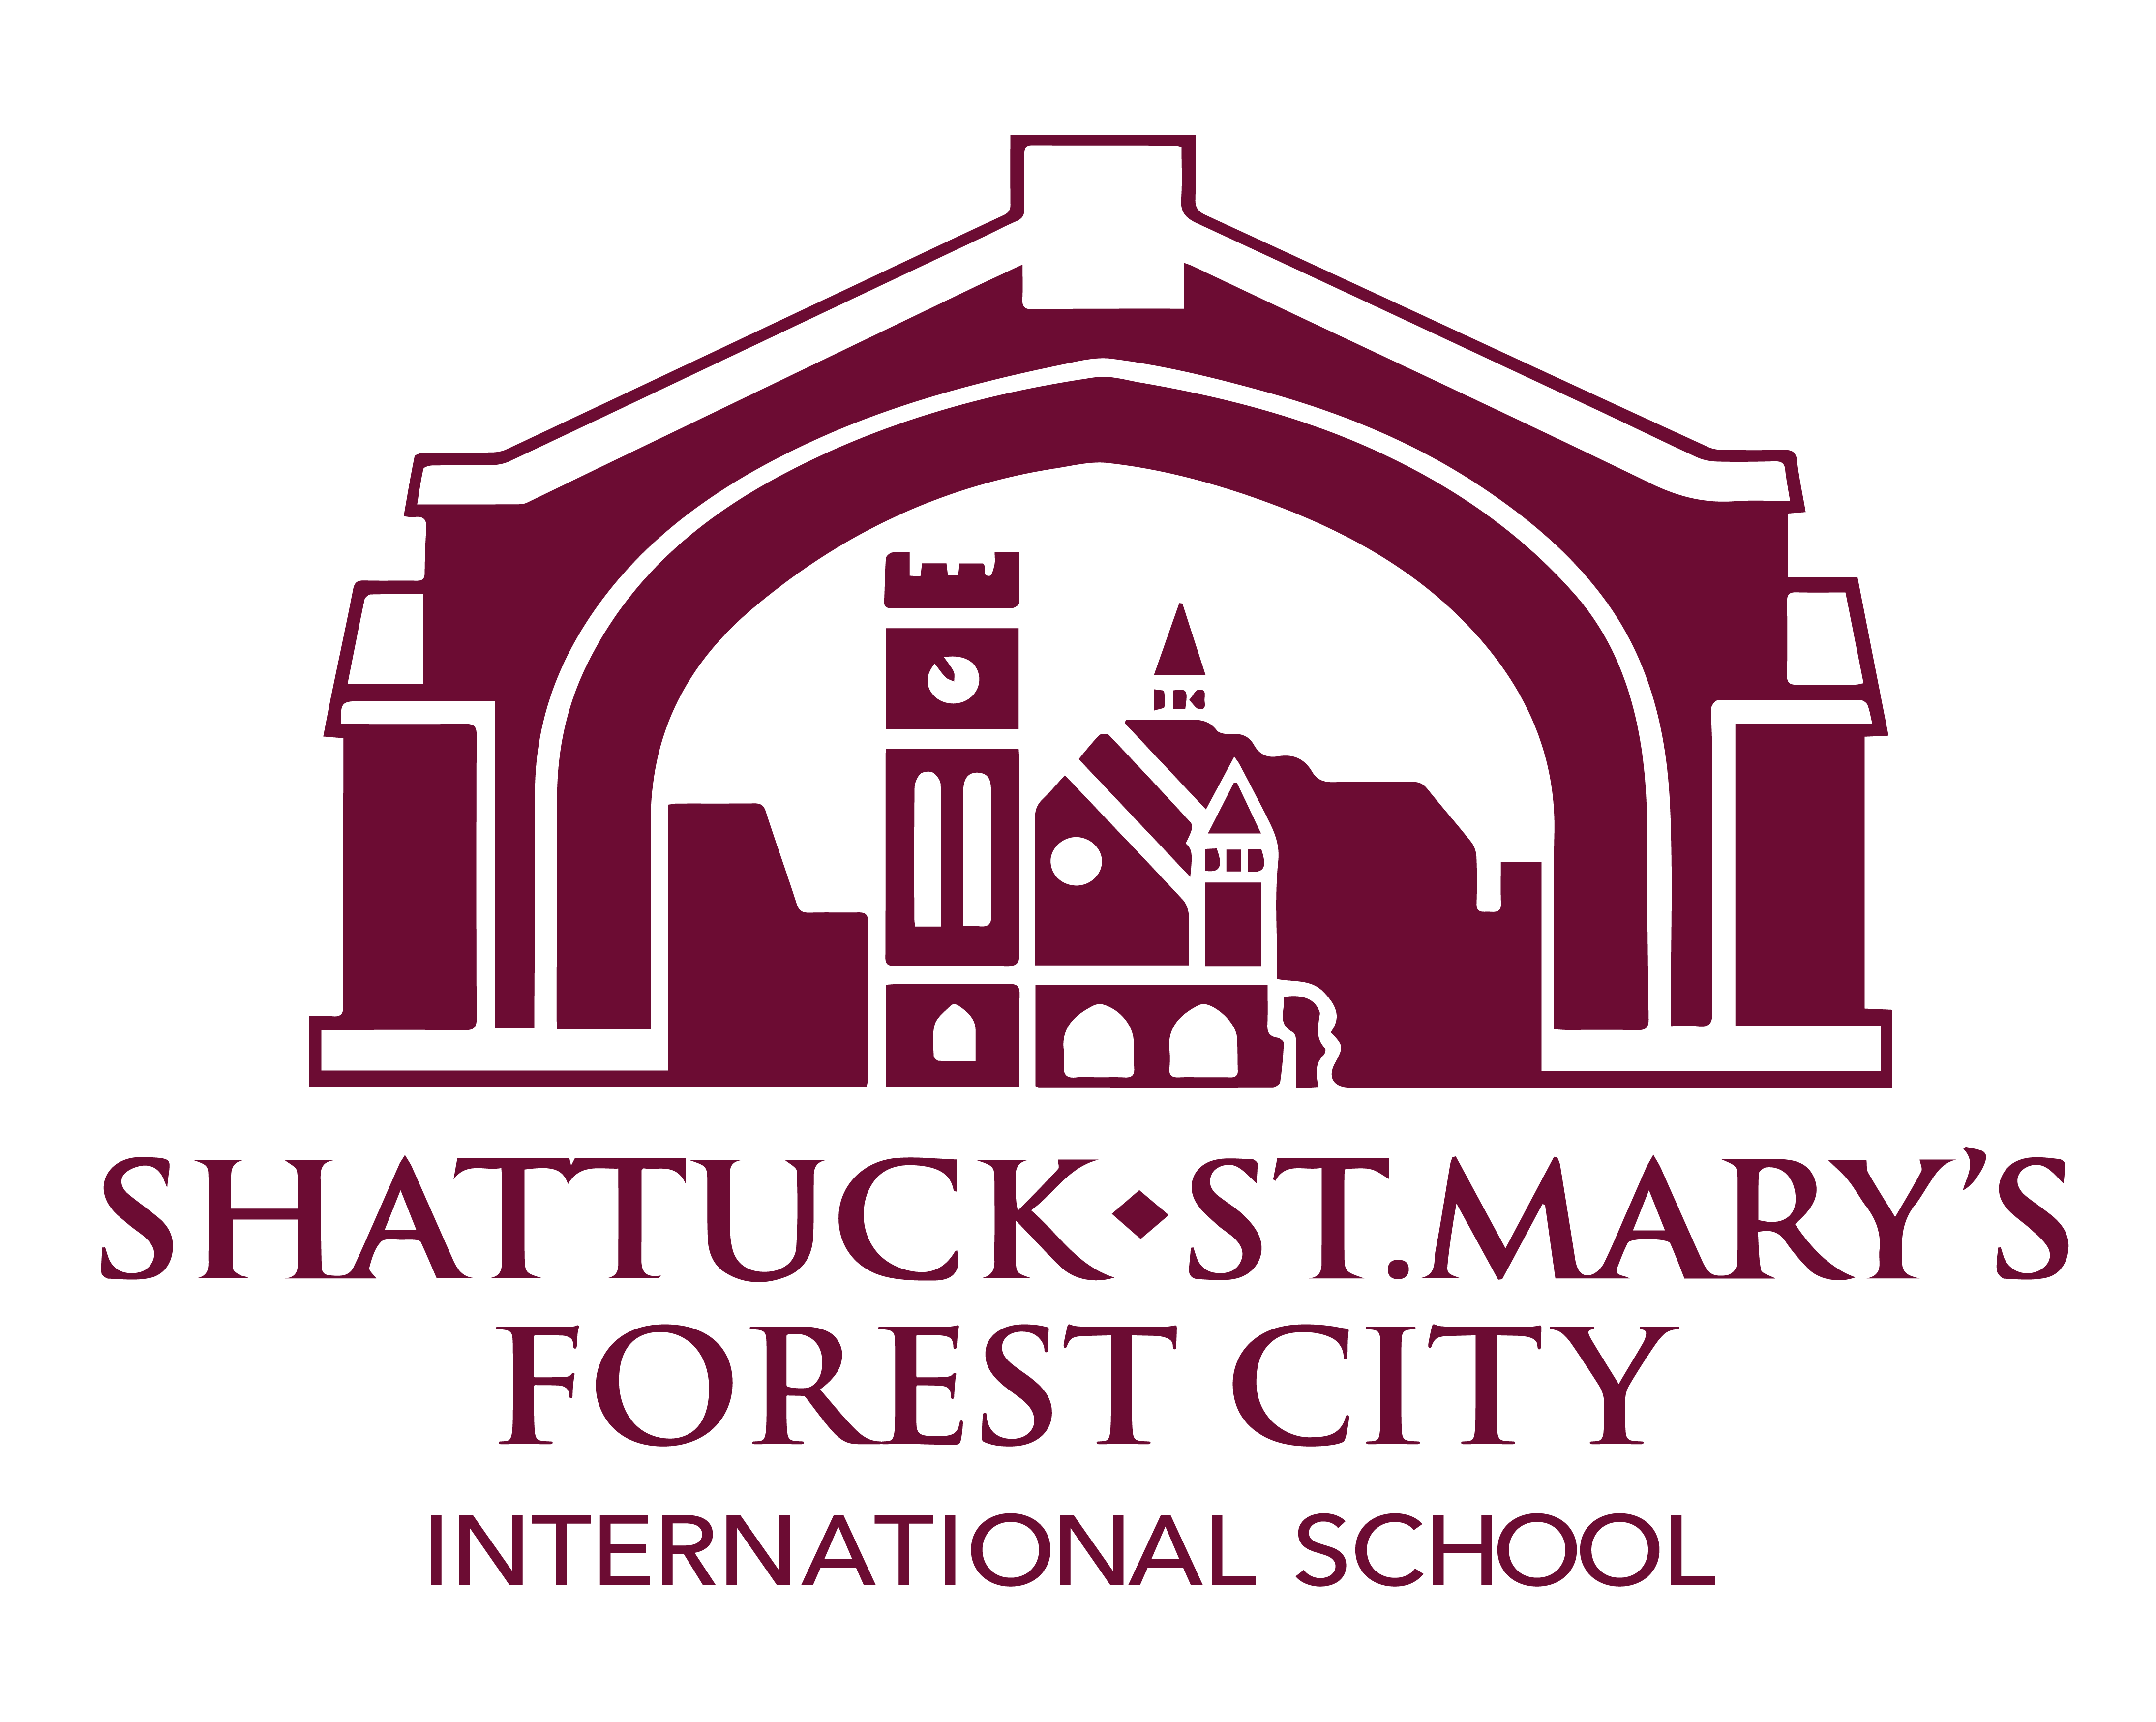 Shattuck St.Mary's Forest City International School